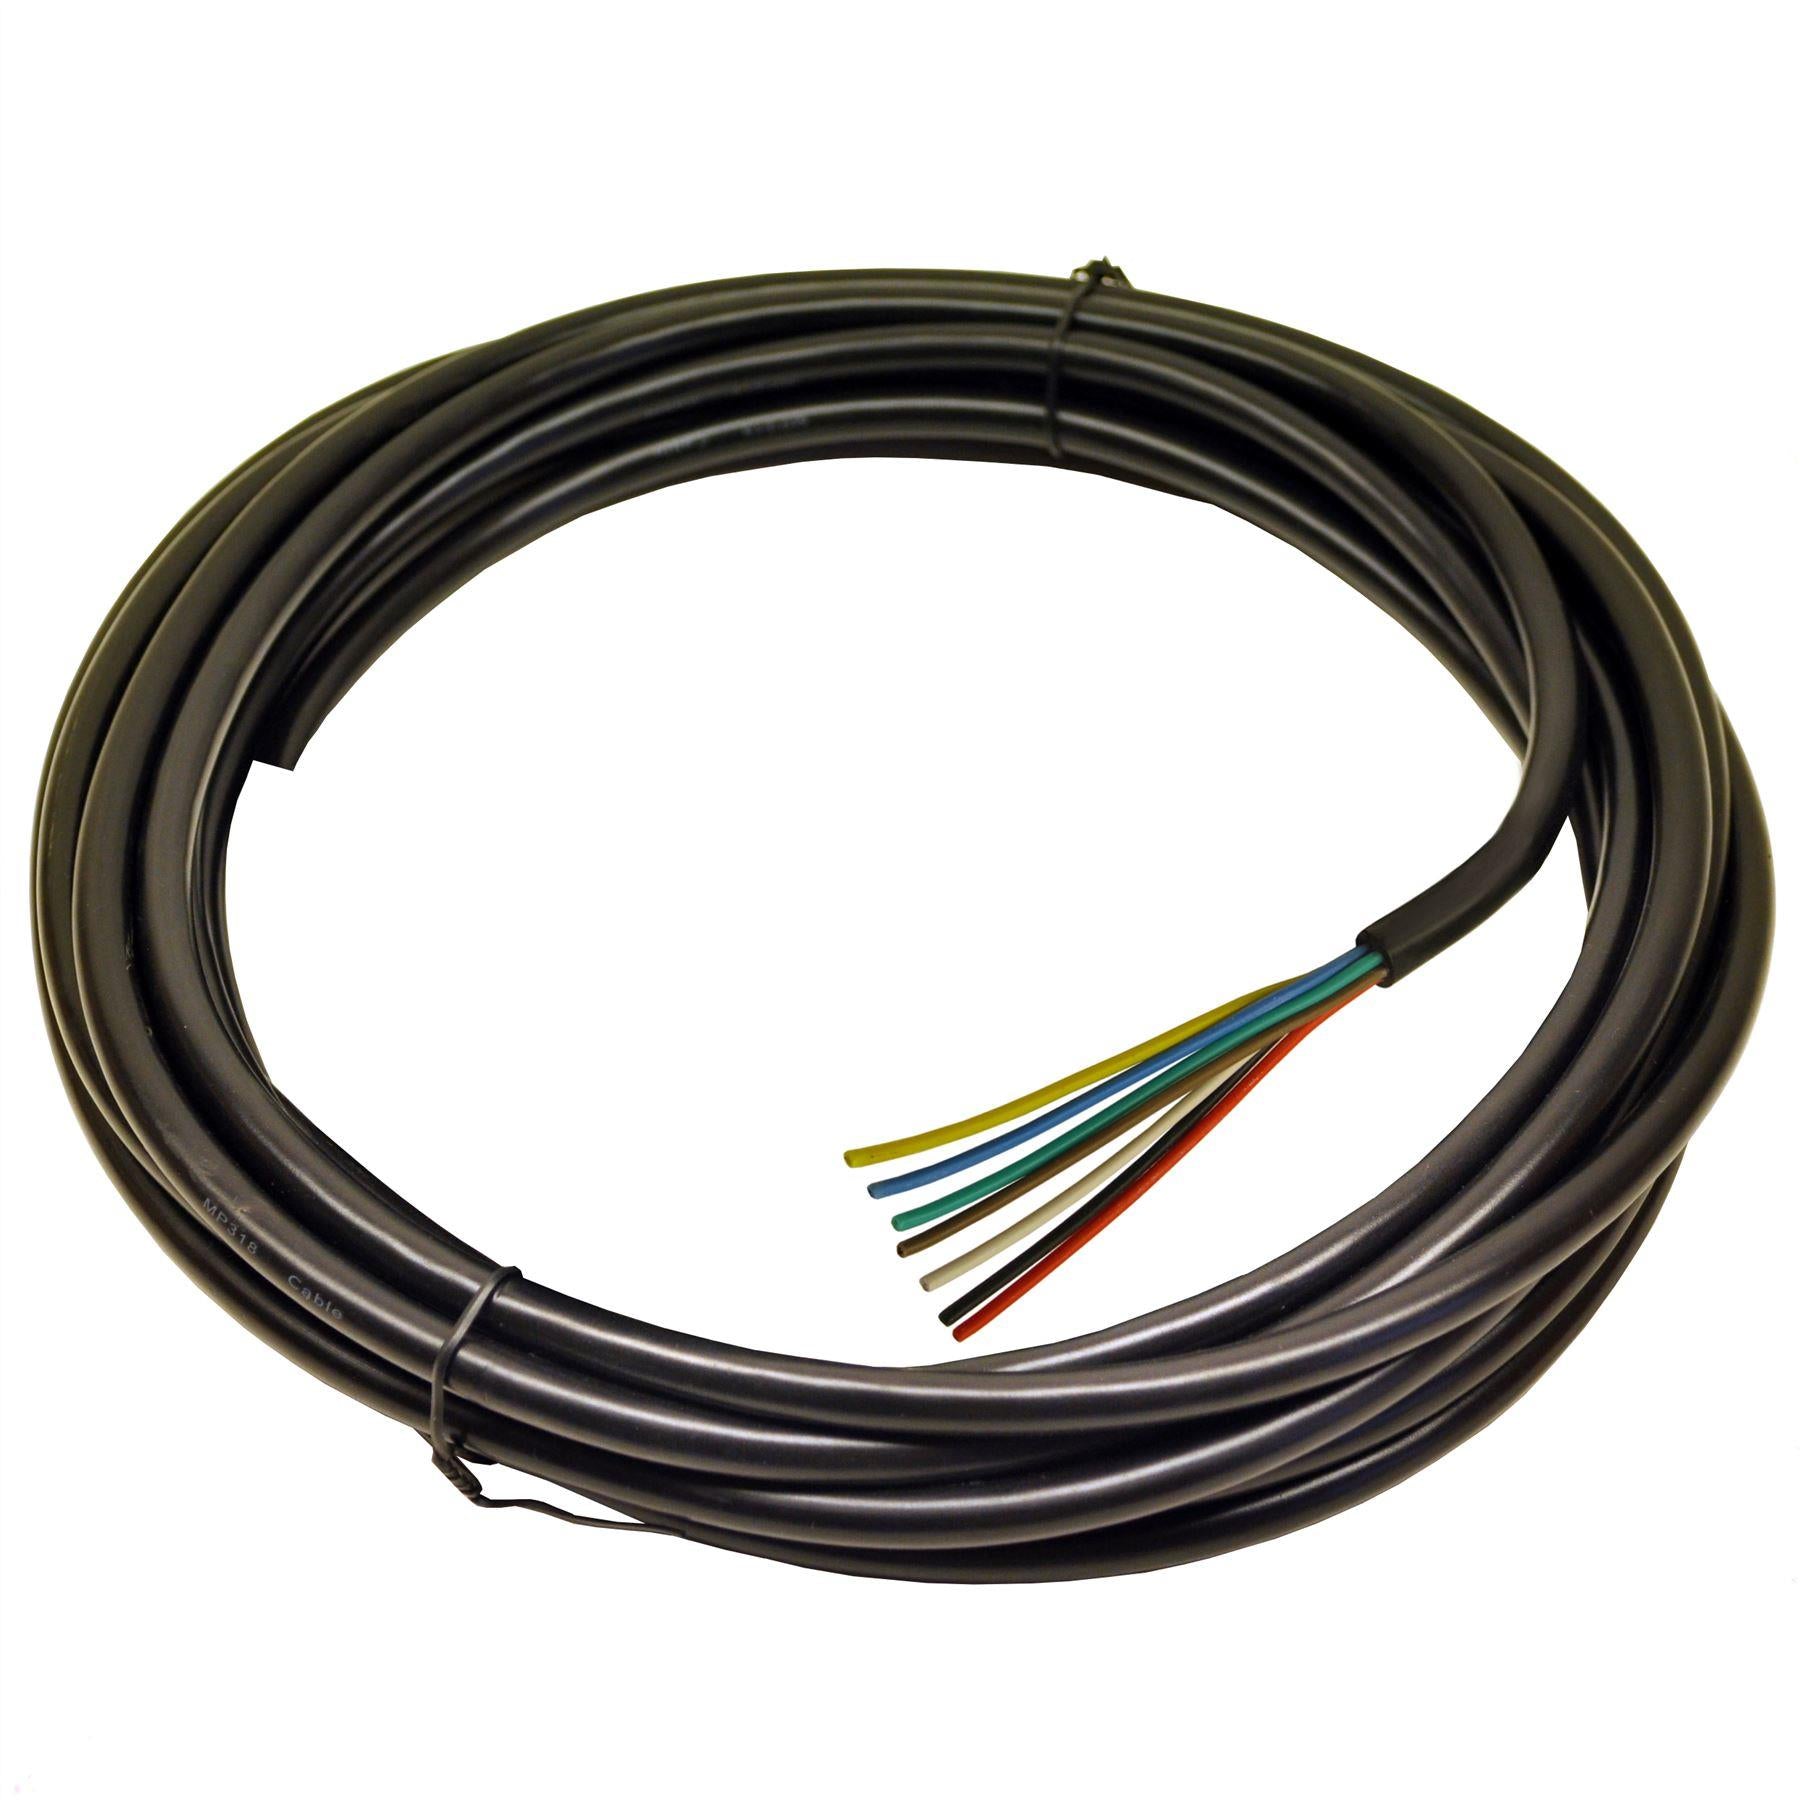 7 Core Wire / Cable For Trailer & Caravan Automotive Grade